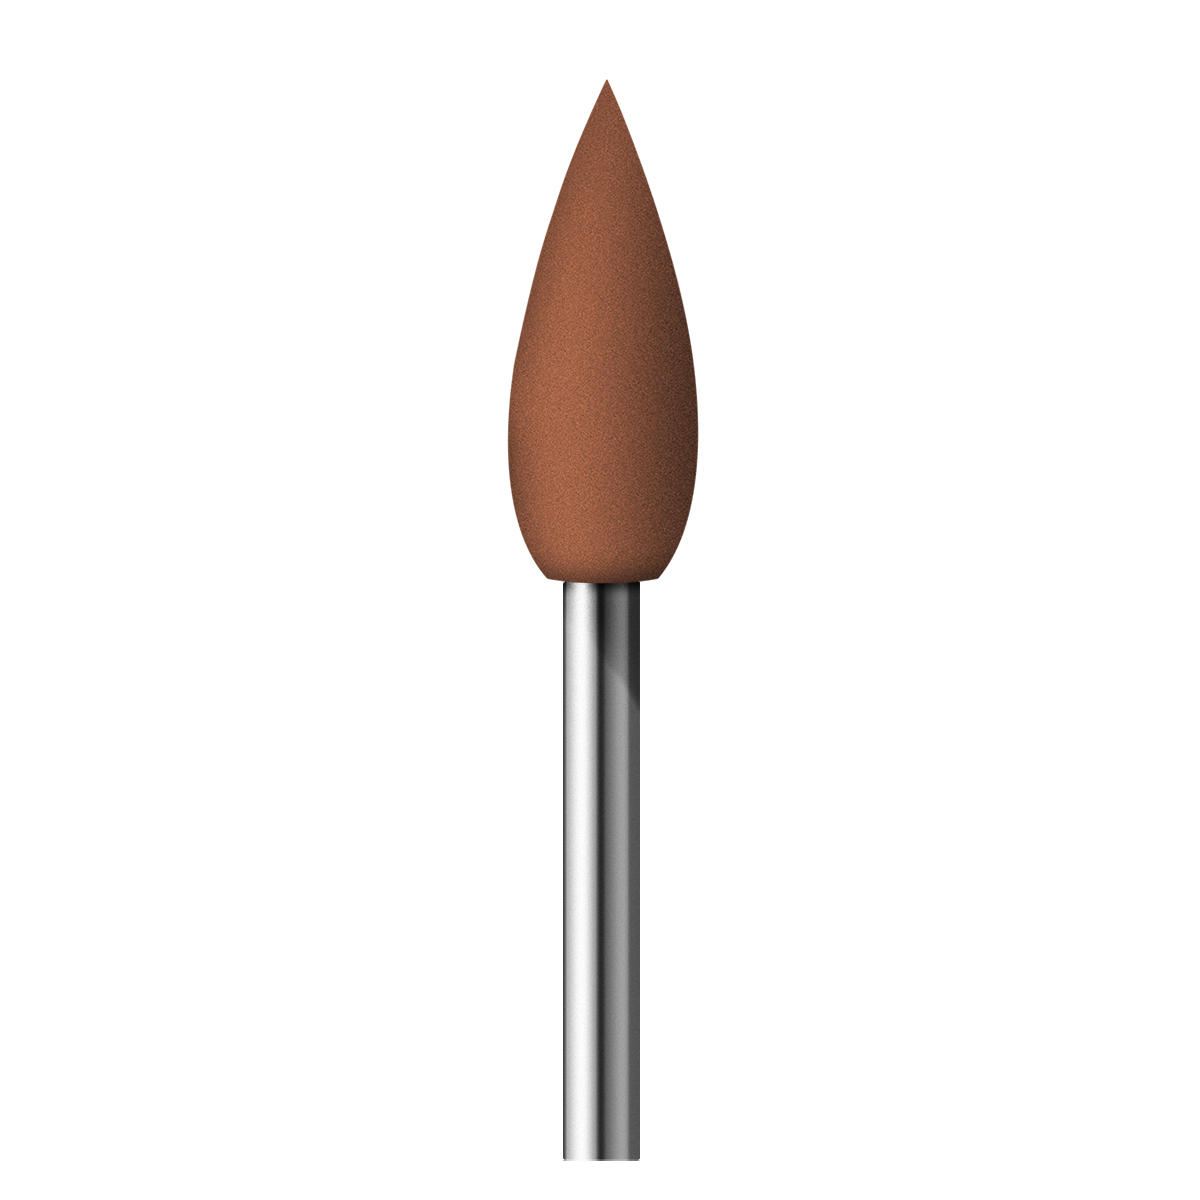 Polissoir Alphaflex, brun, pointe, Ø 5,5 x 16,3 mm, grain grossier, tige HP